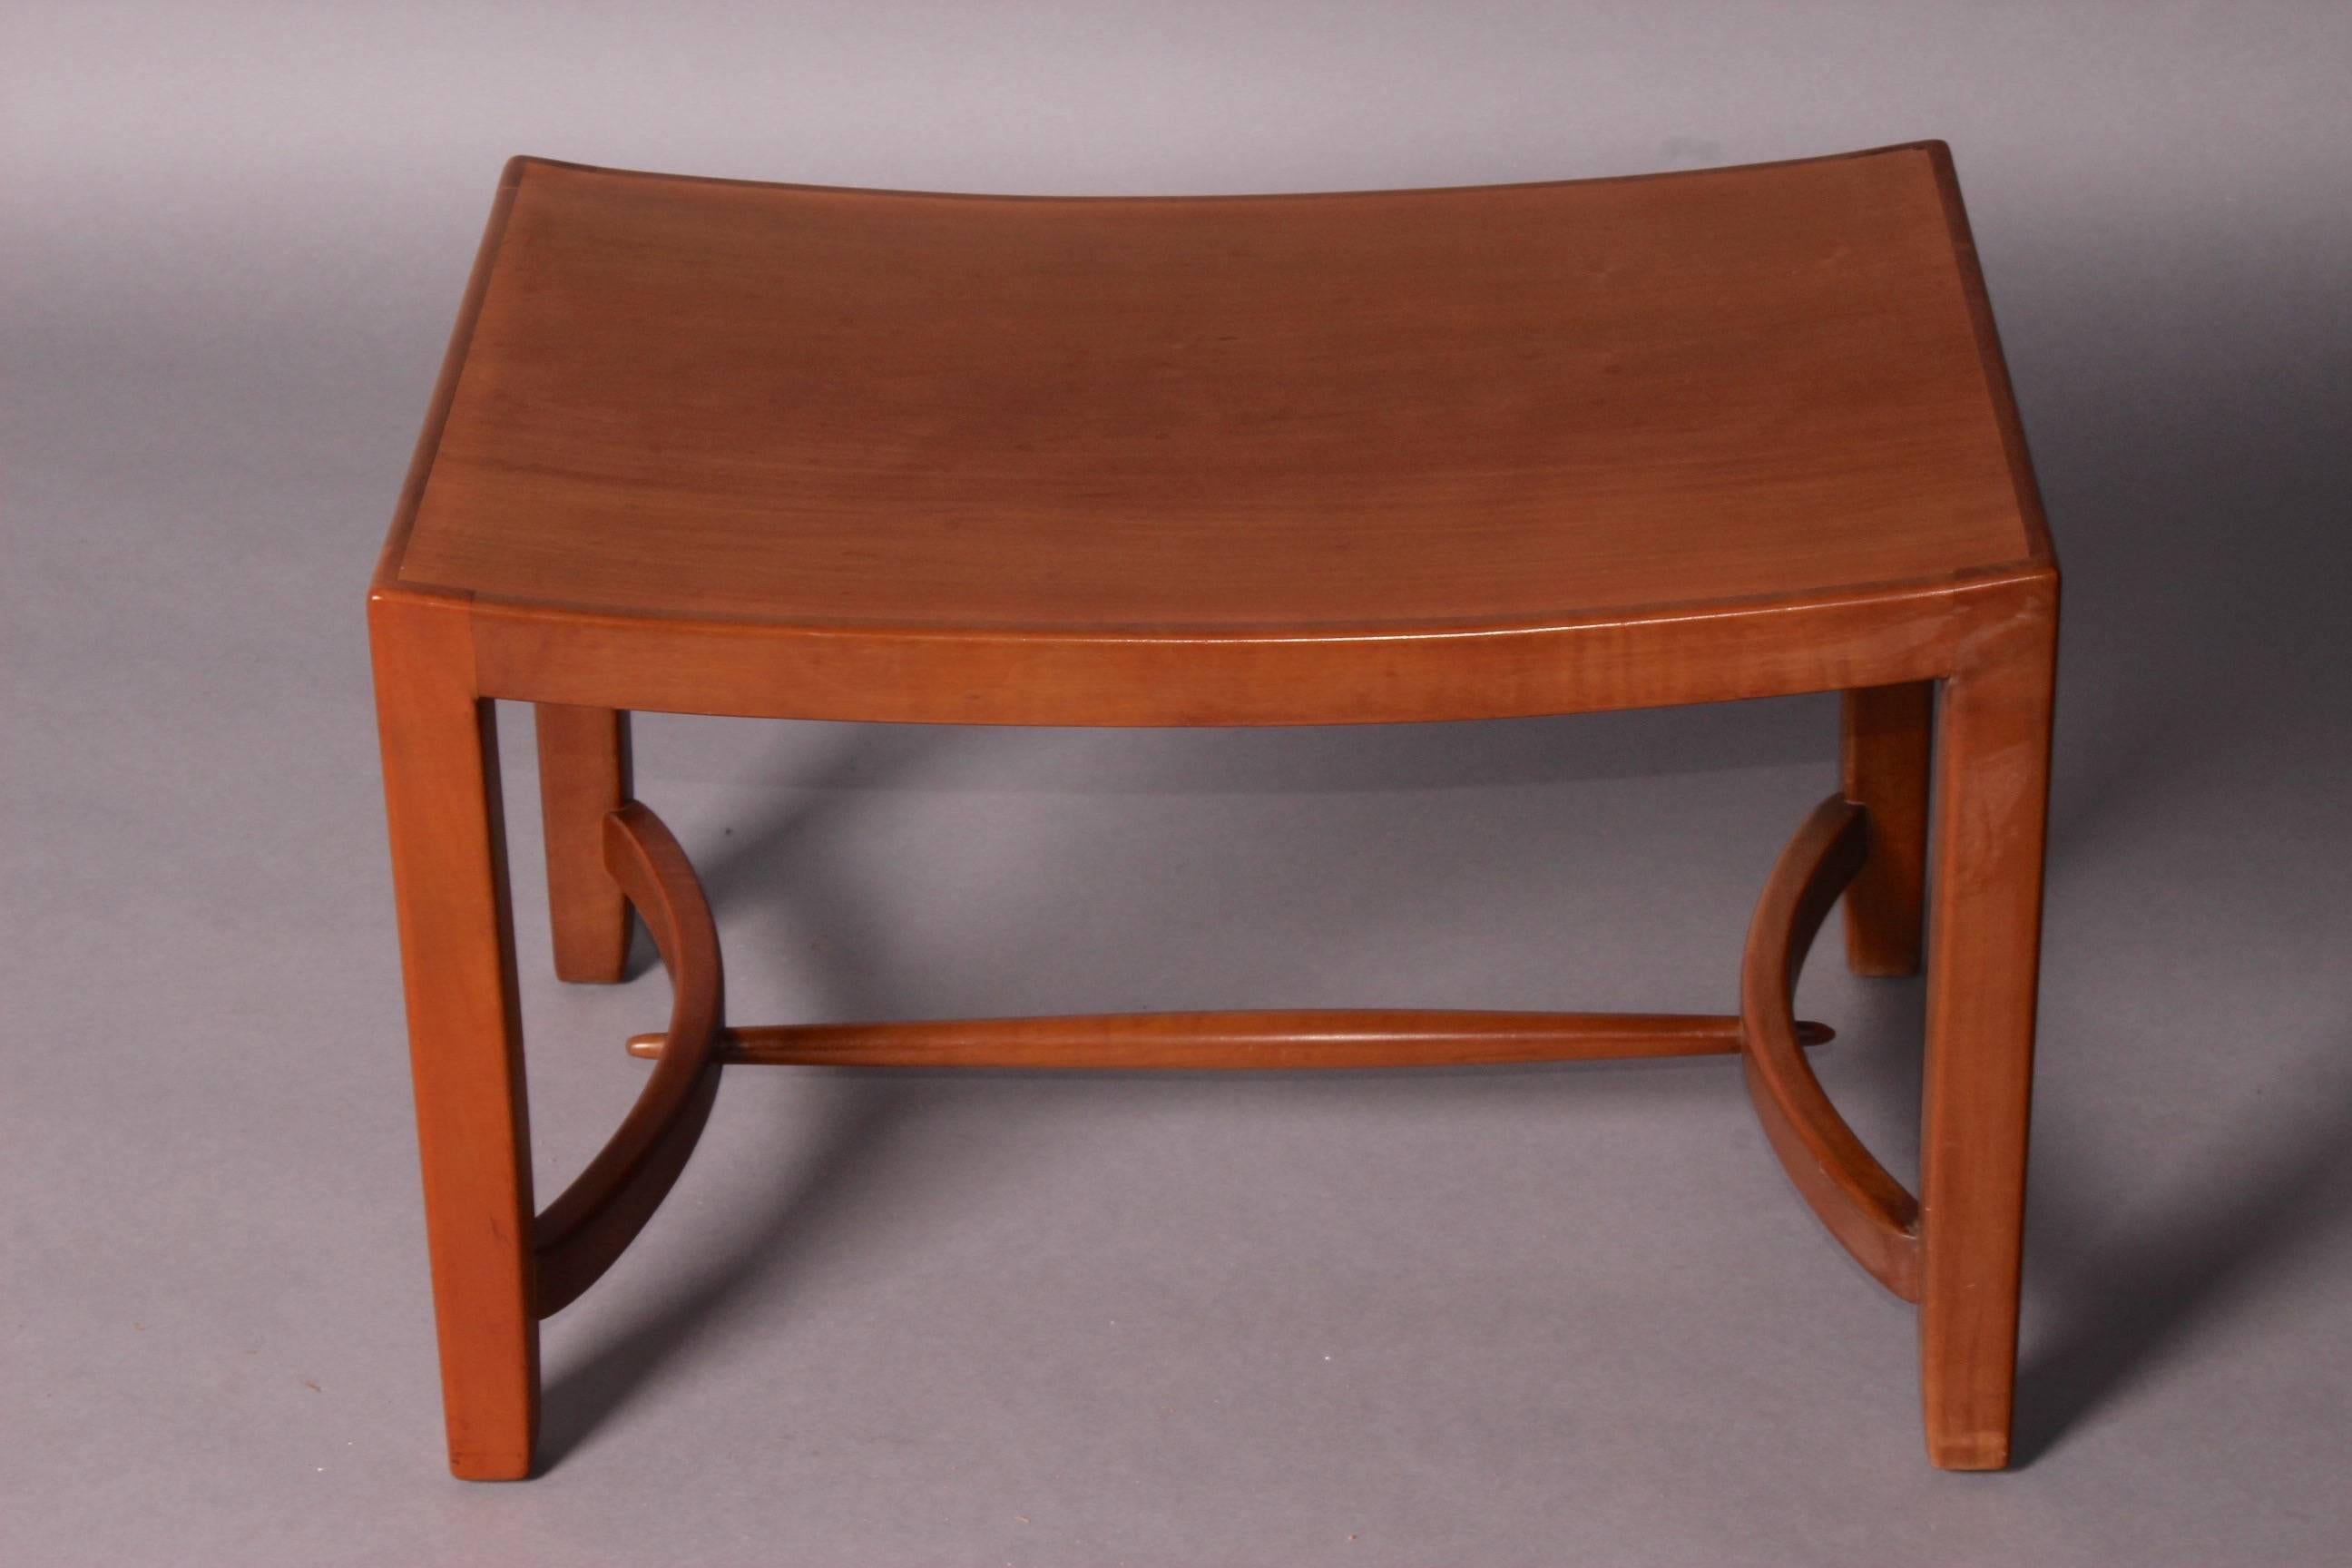 Curved wood stool.